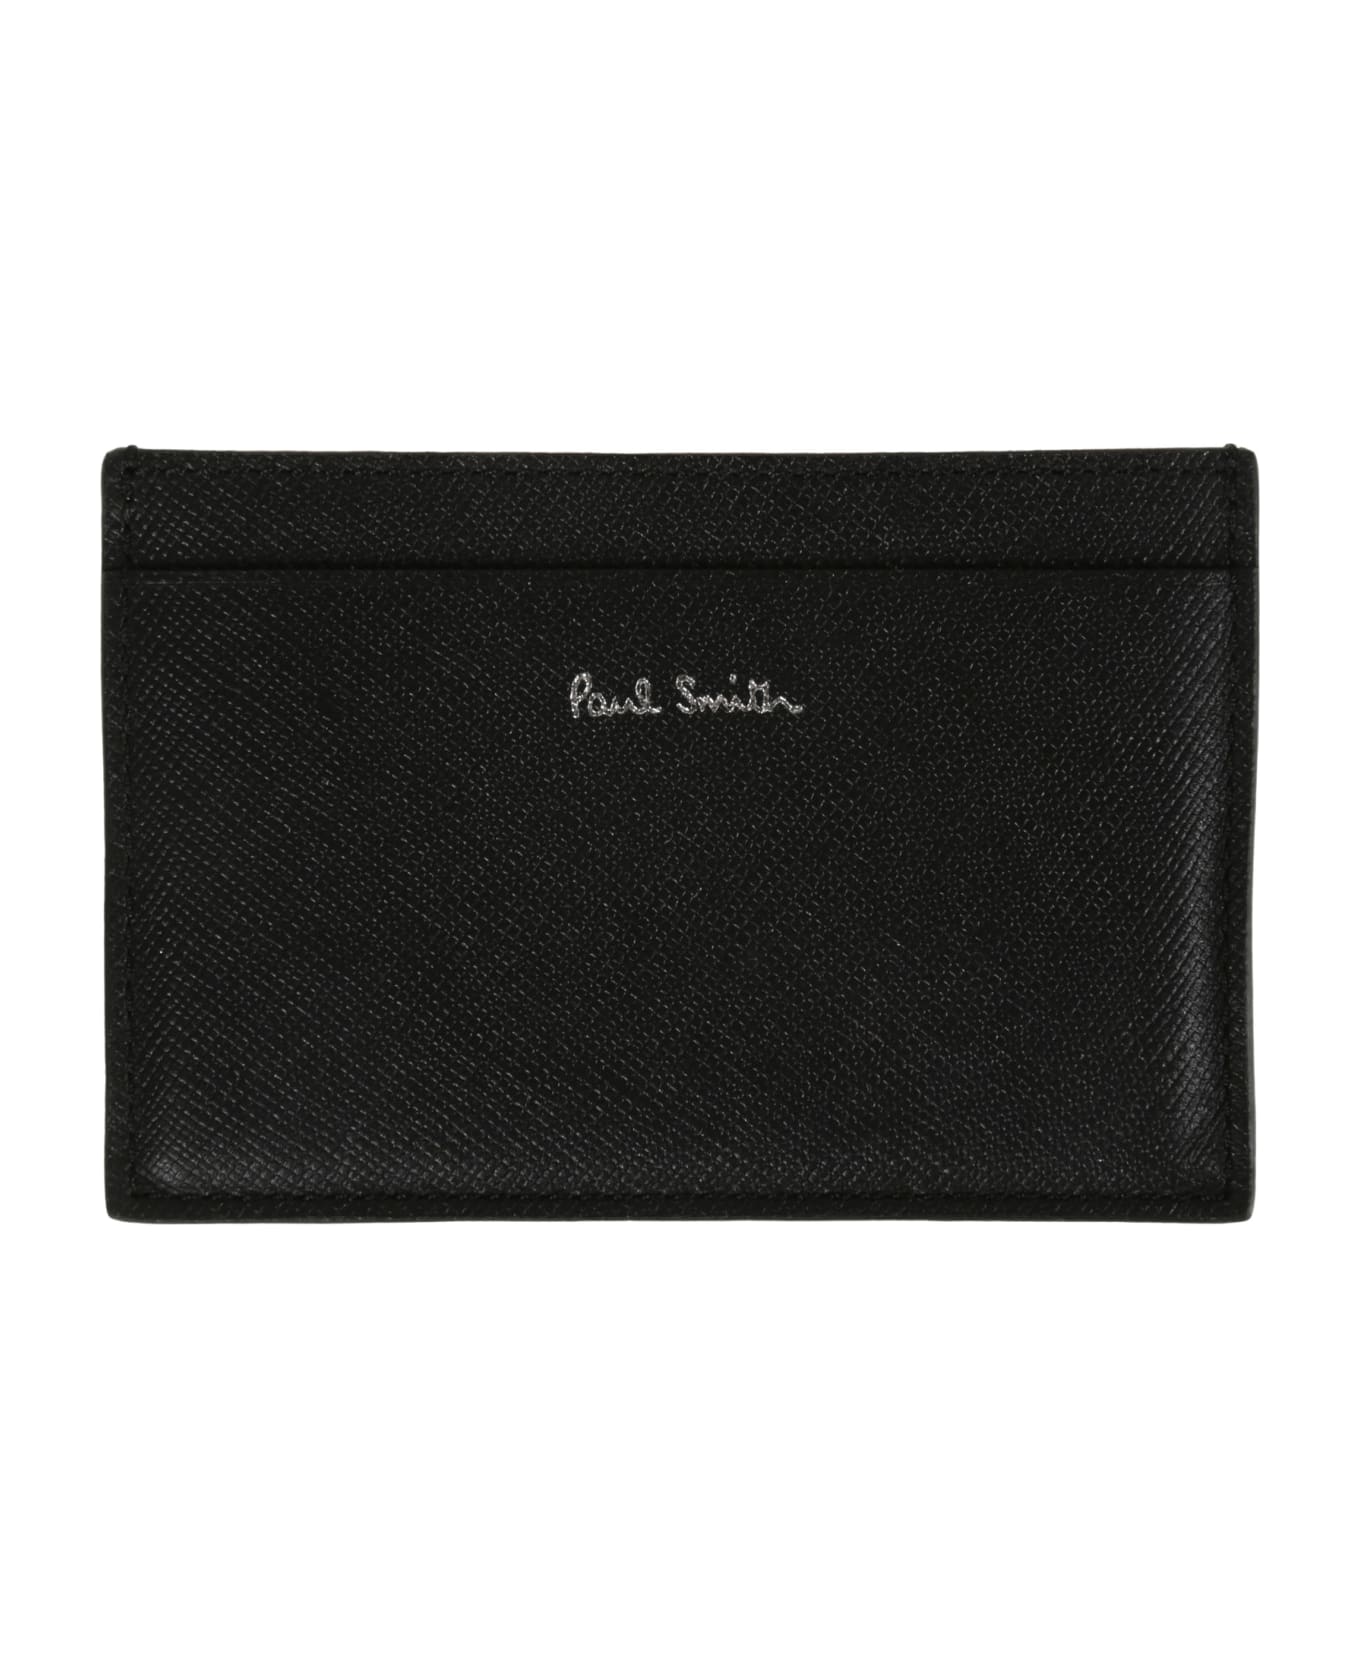 Paul Smith Wallet Cc Case Mini - Black